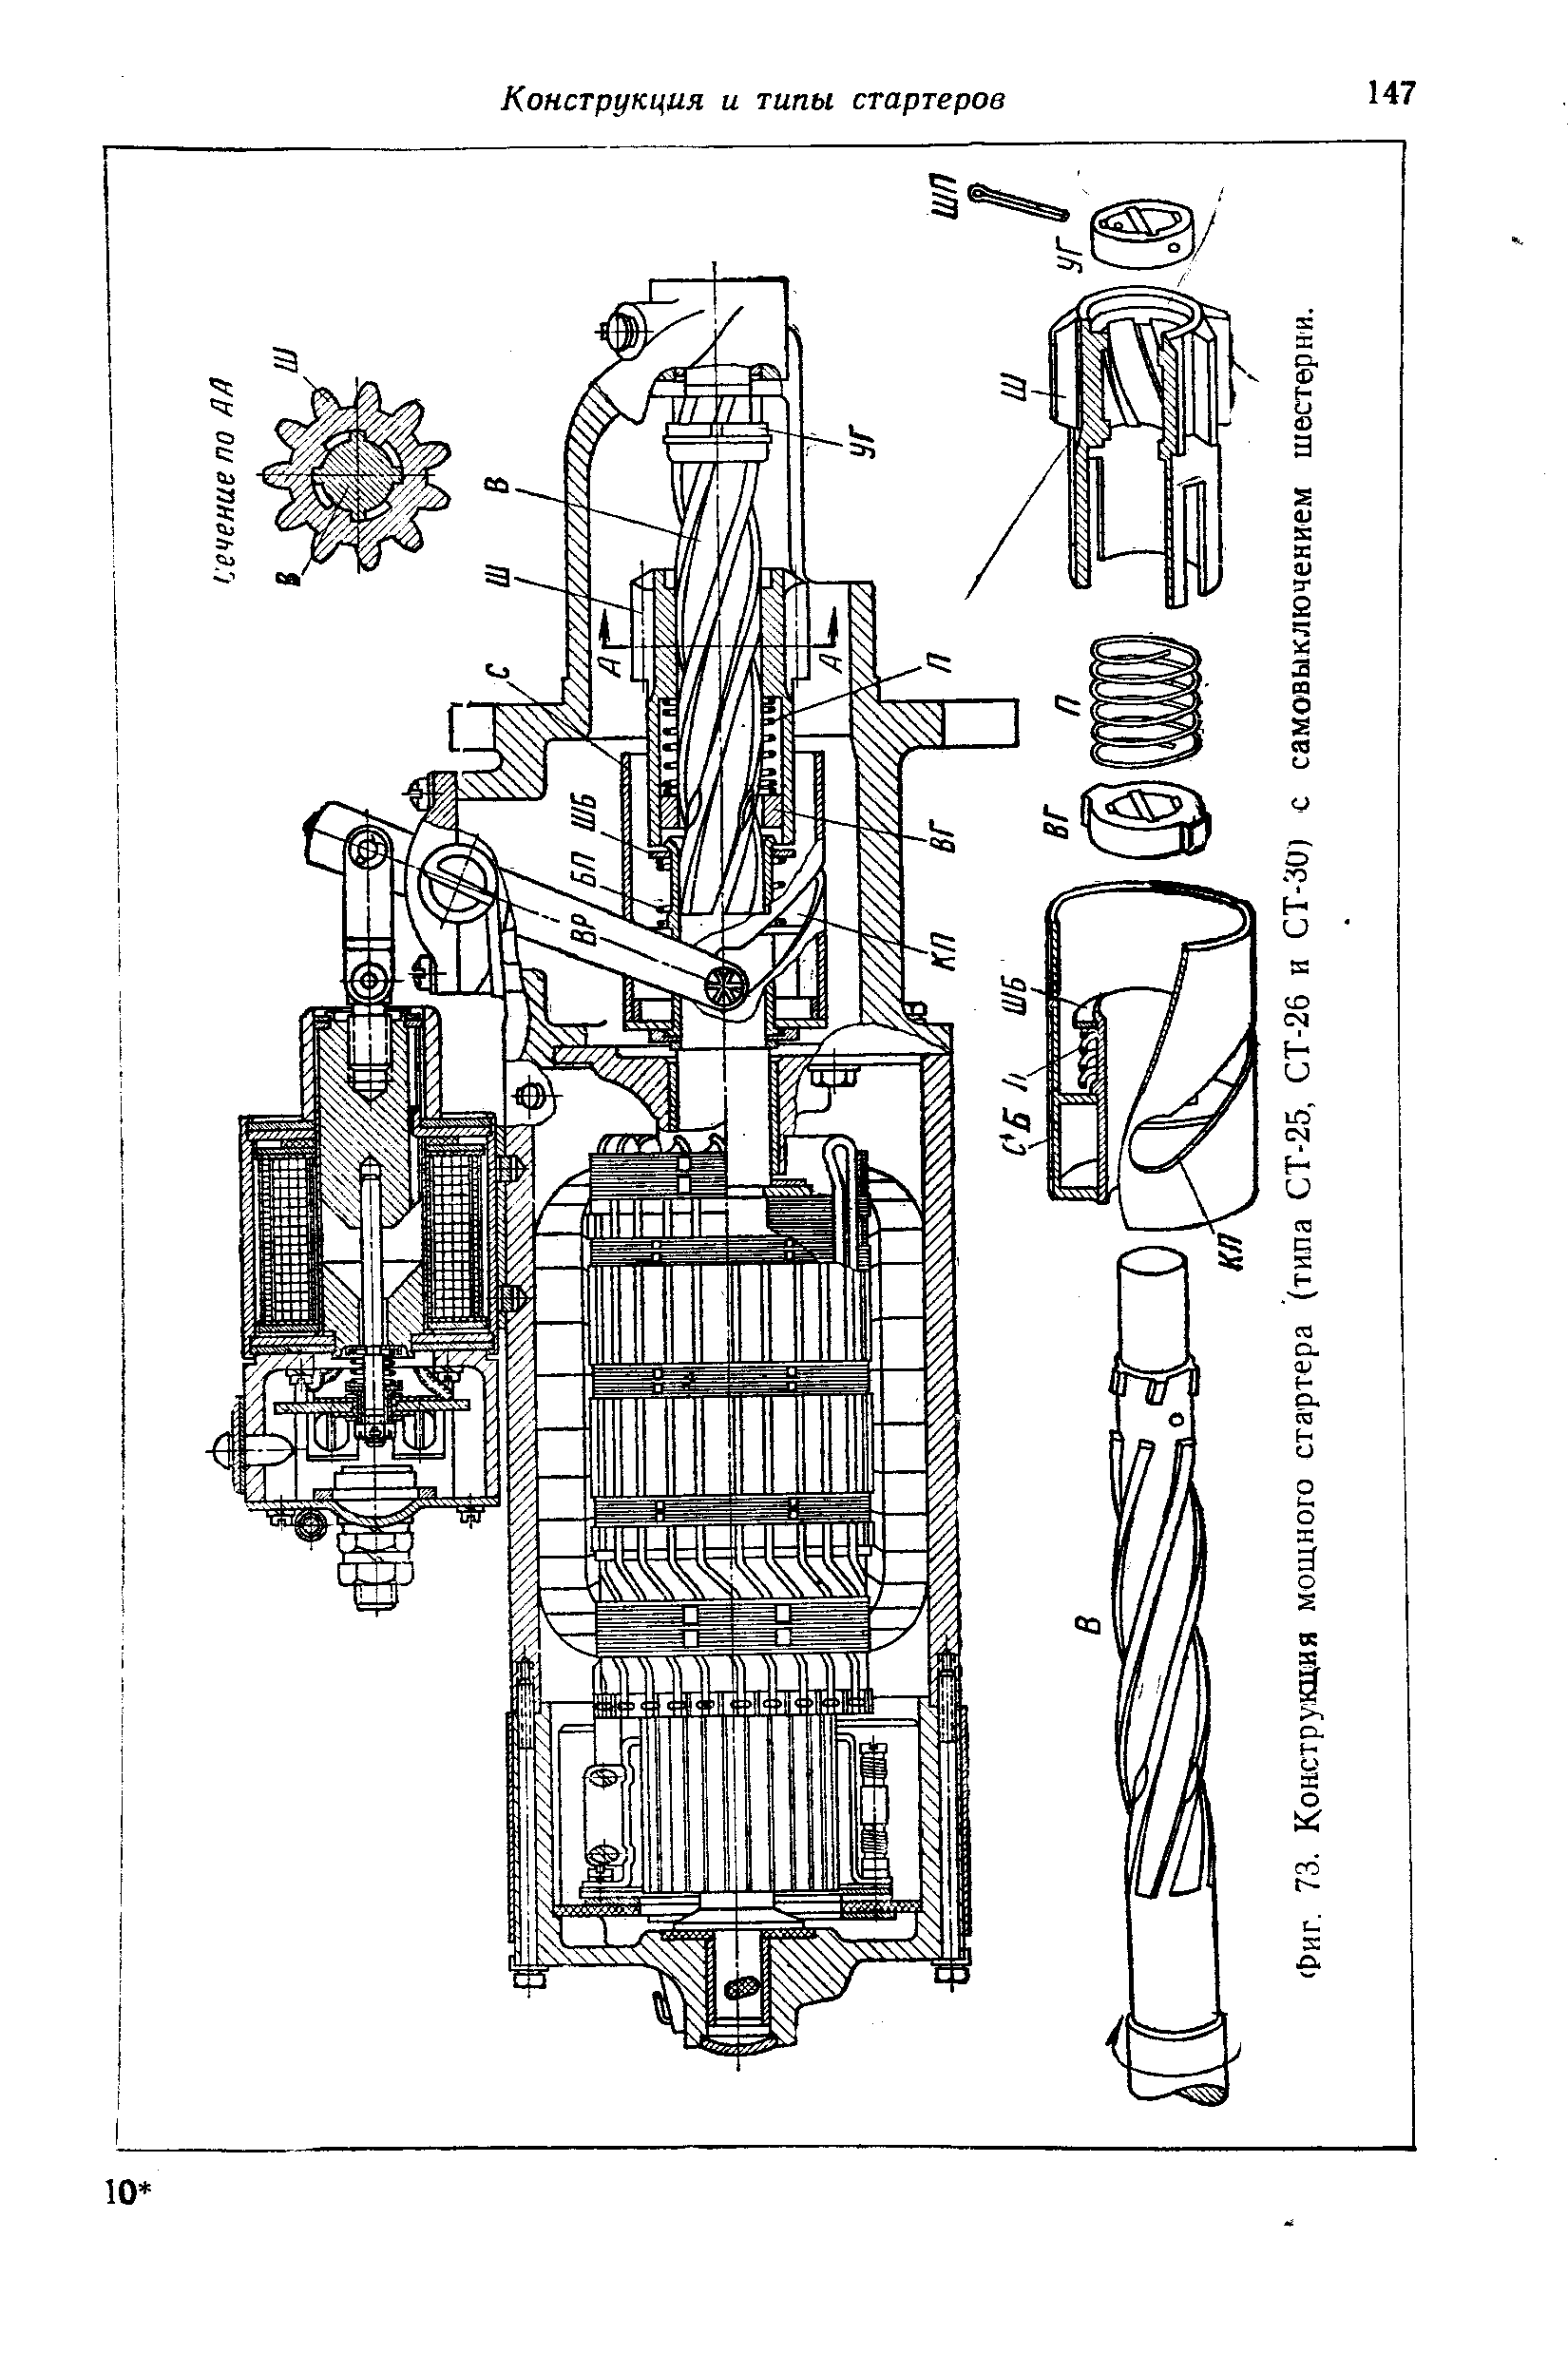 Фиг. 73. Конструкция мощного стартера (типа СТ-25, СТ-26 и СТ-ЗО) с самовыключением шестерни.
